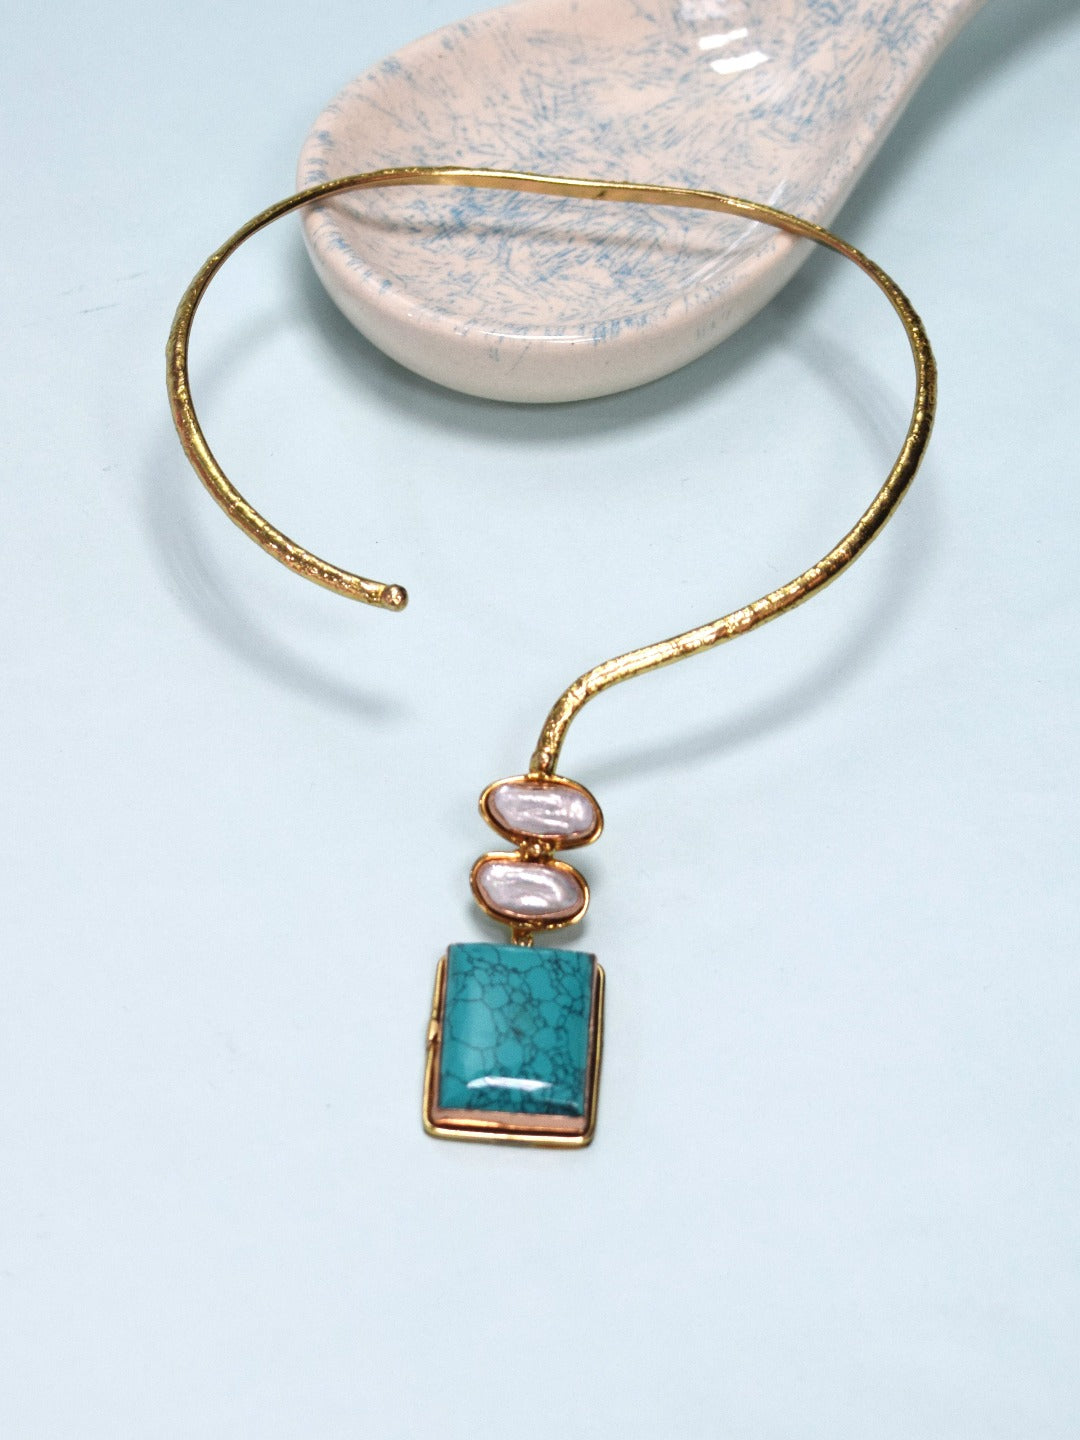 Turquoise pendant choker necklace